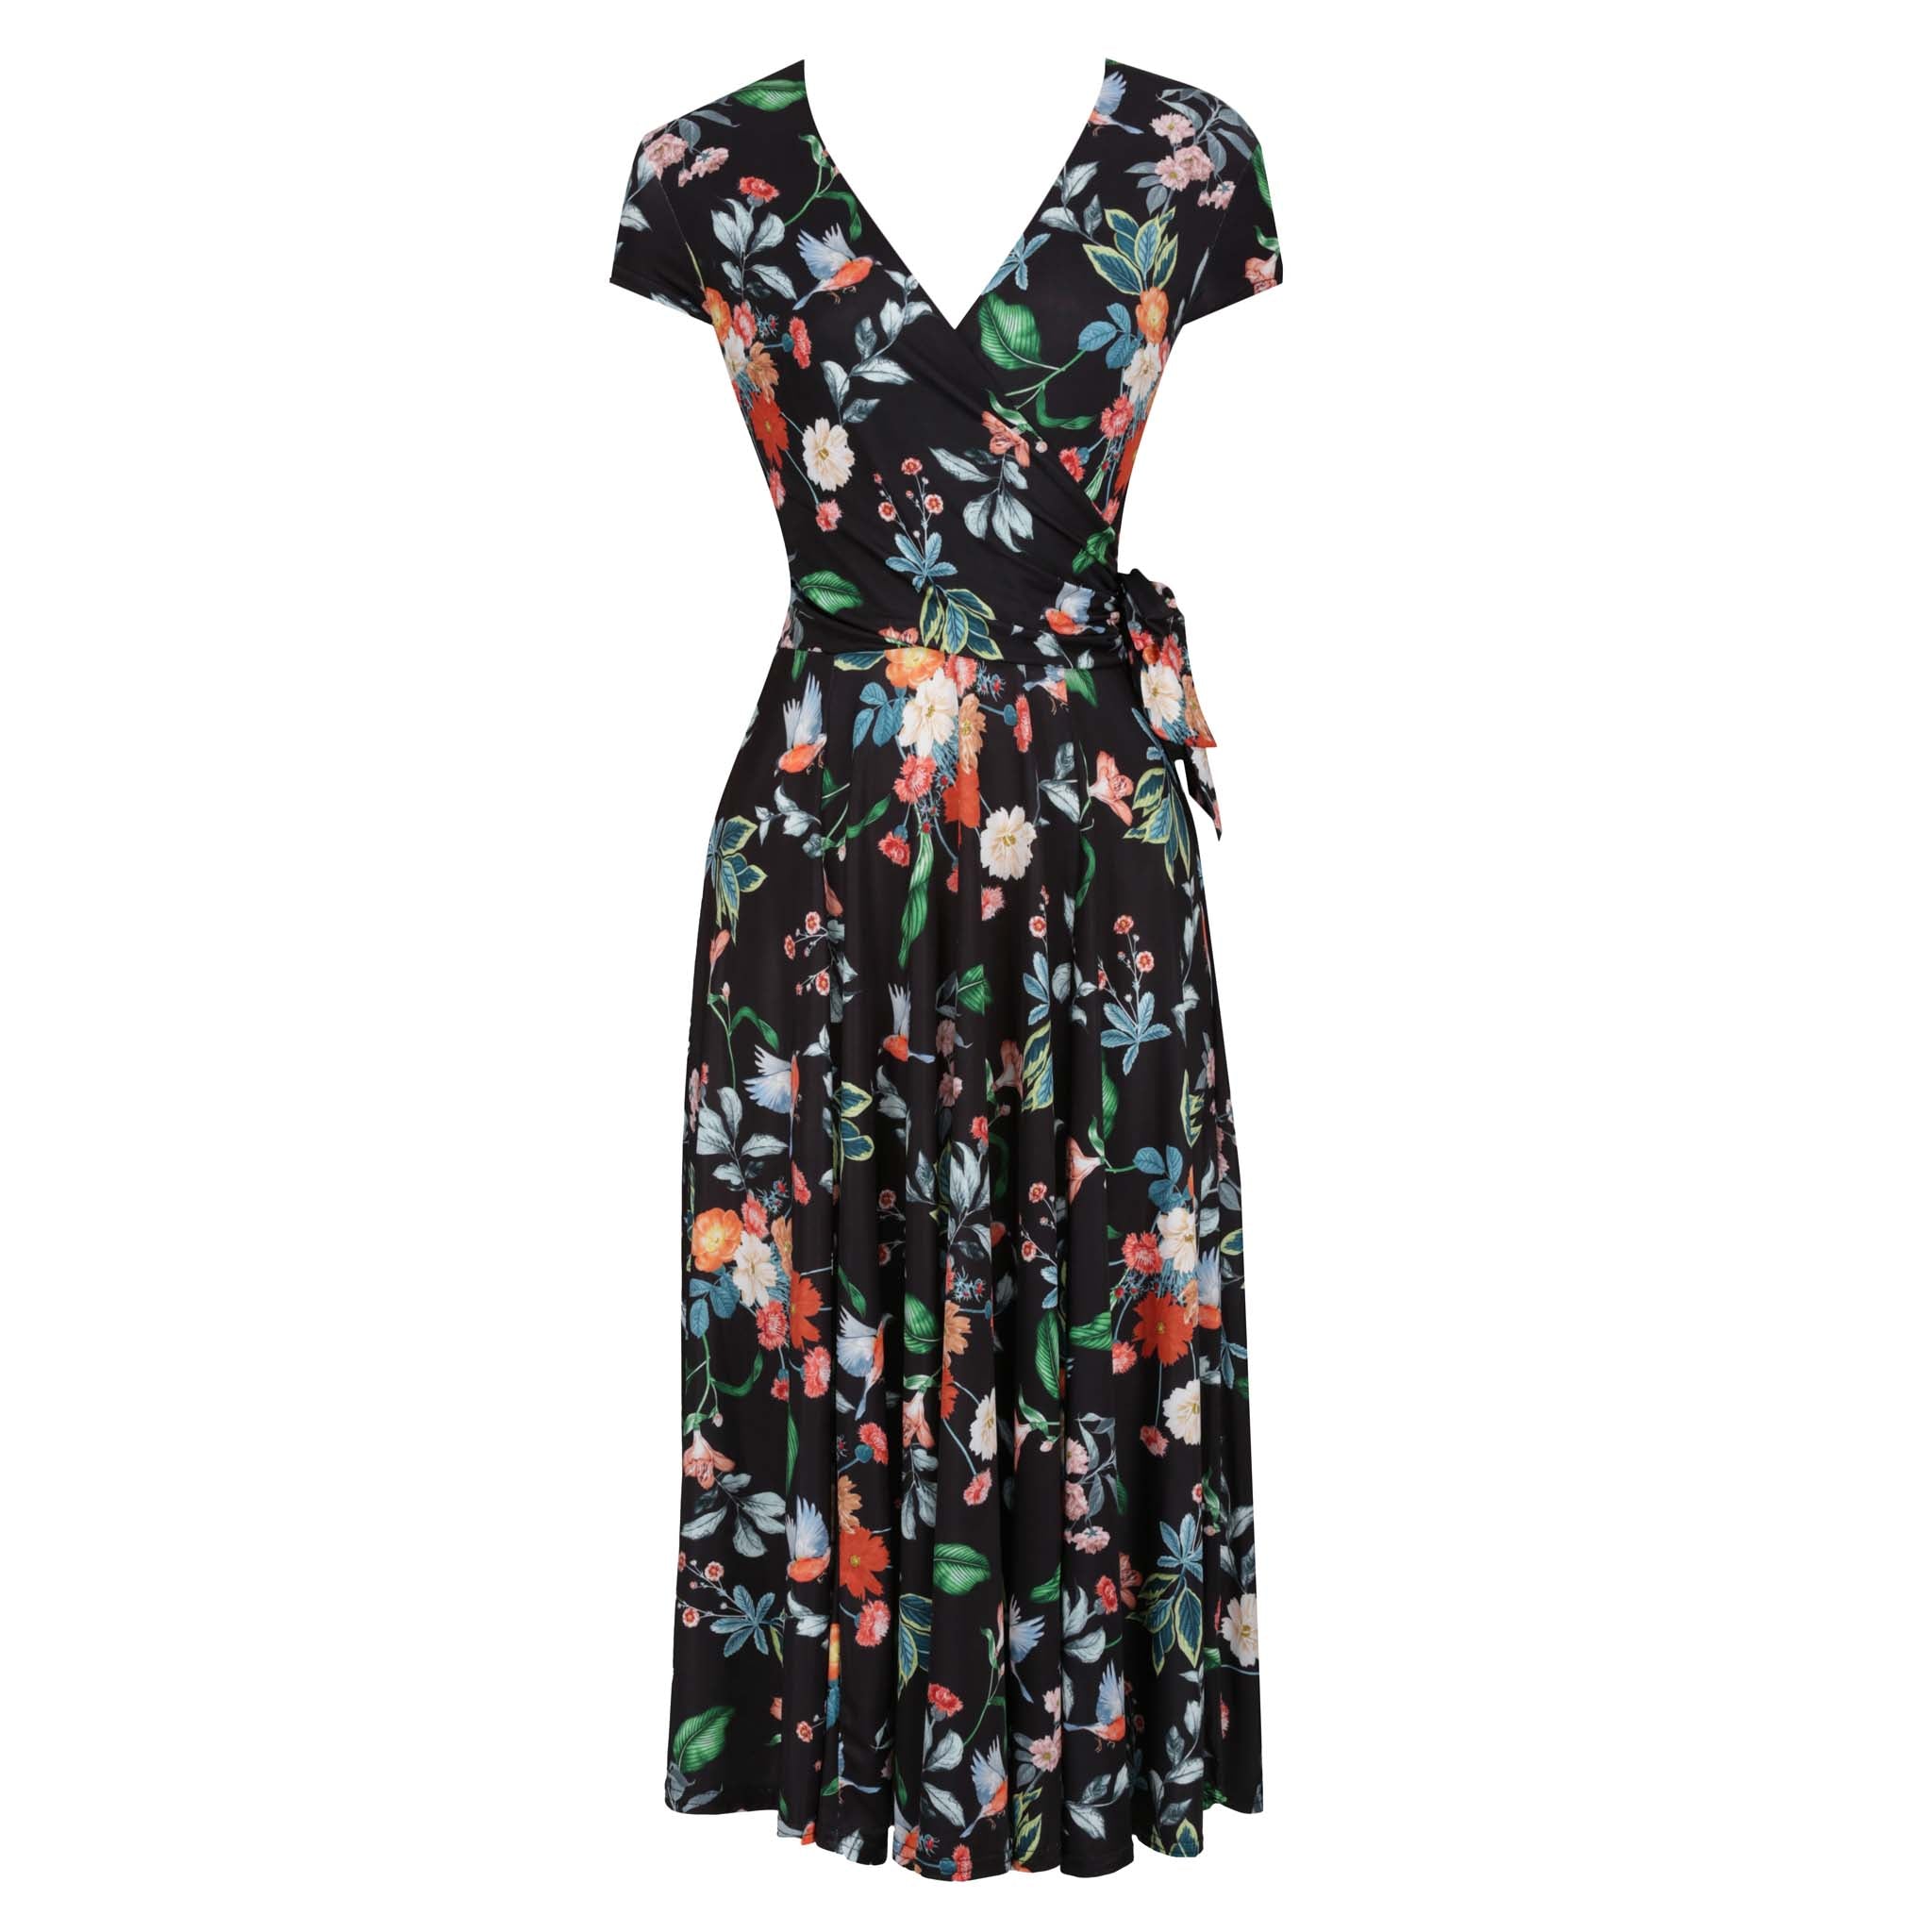 Black Floral Bird Print Cap Sleeve Crossover Top Swing Dress